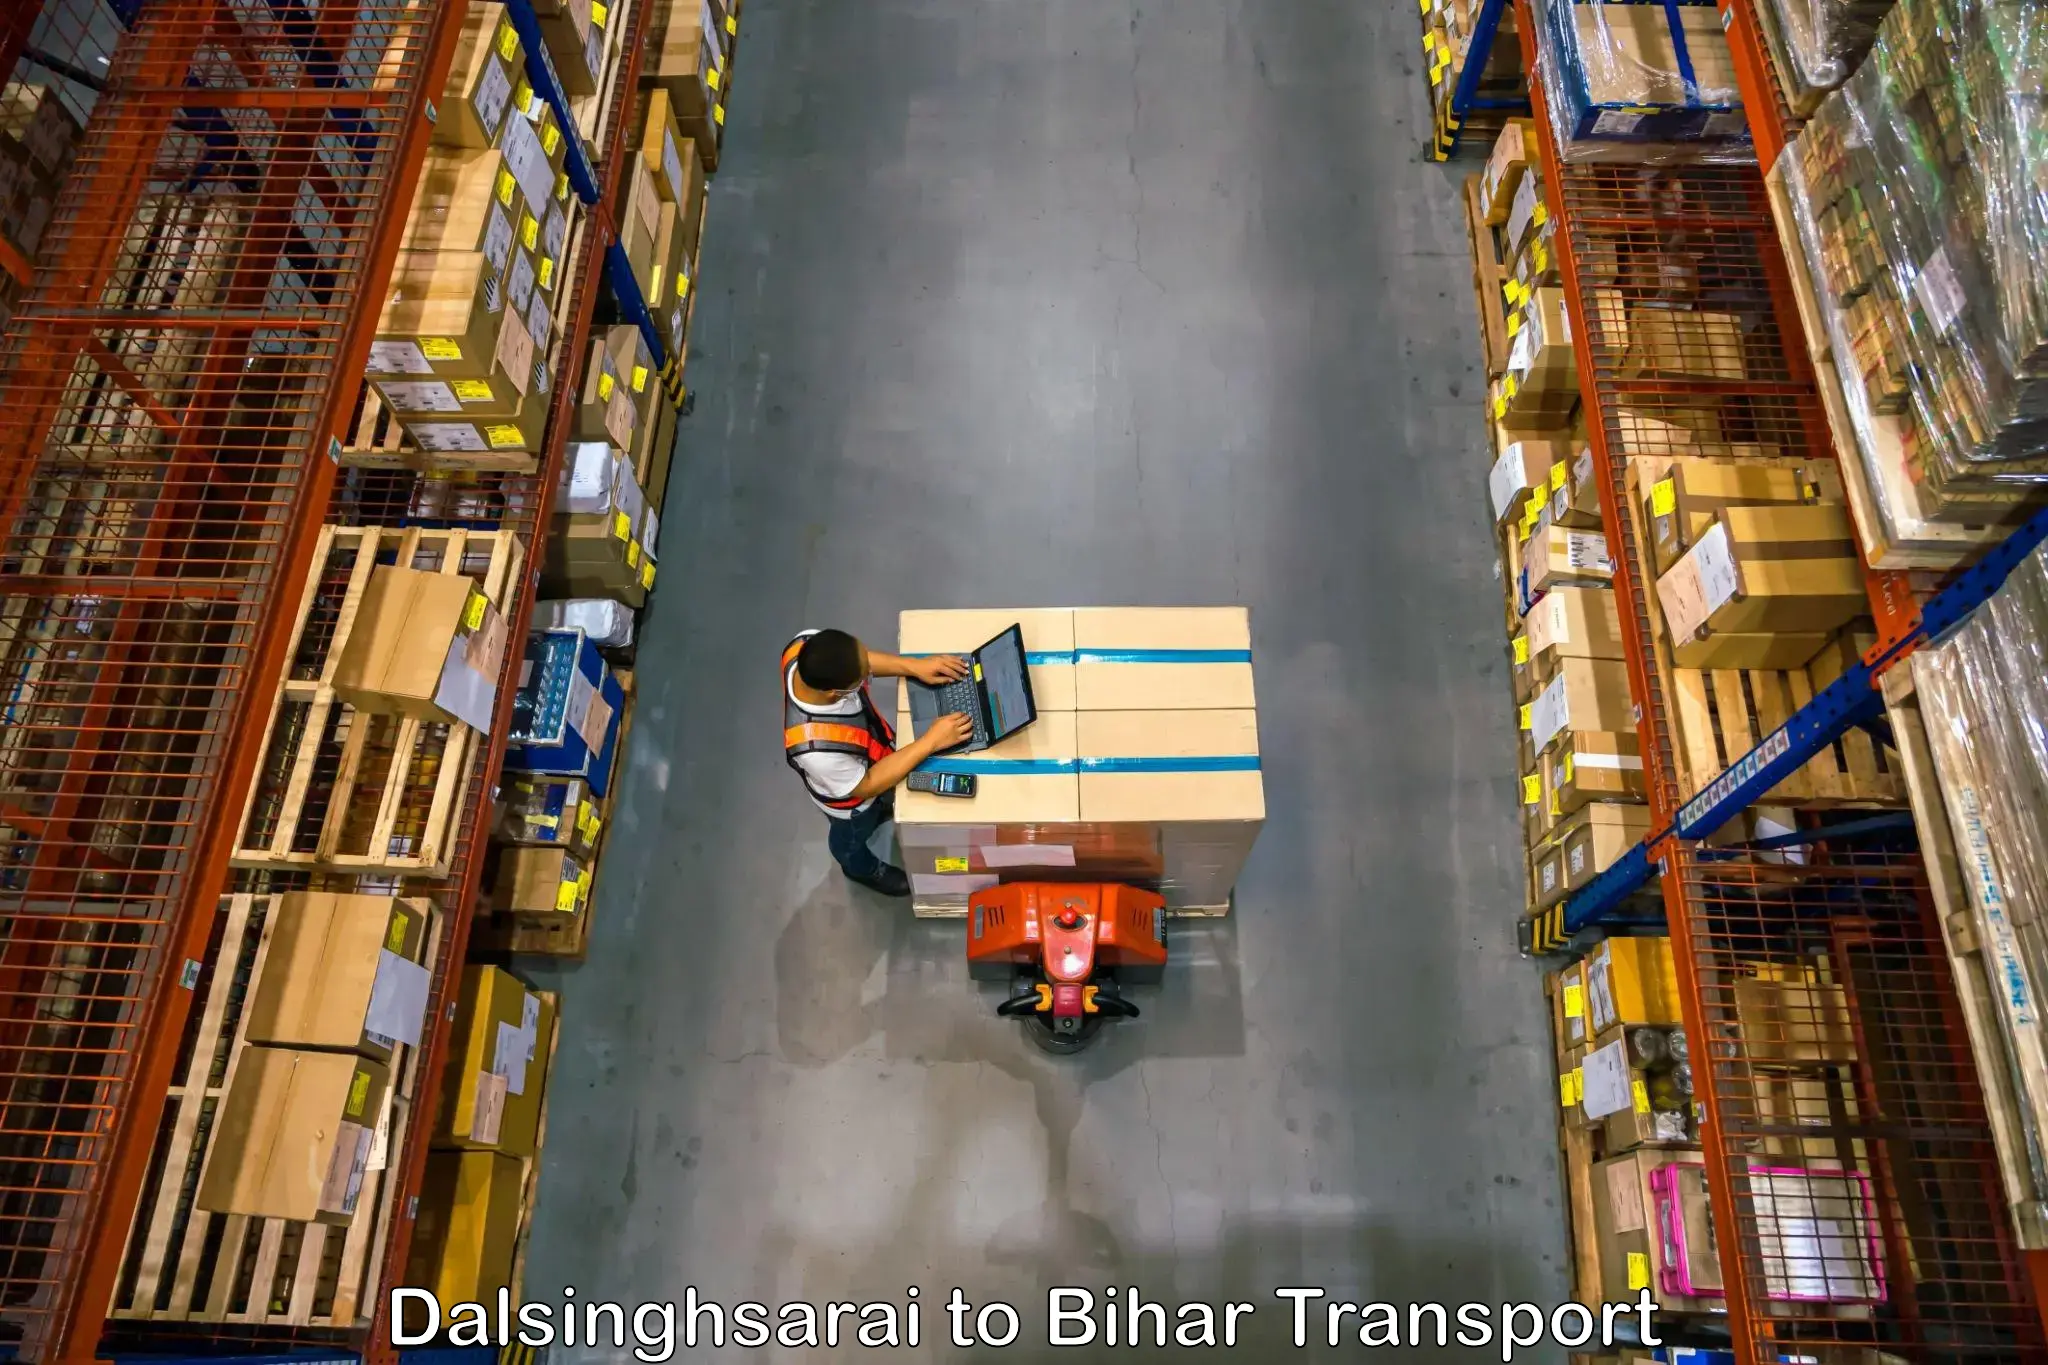 Nearest transport service Dalsinghsarai to Piro